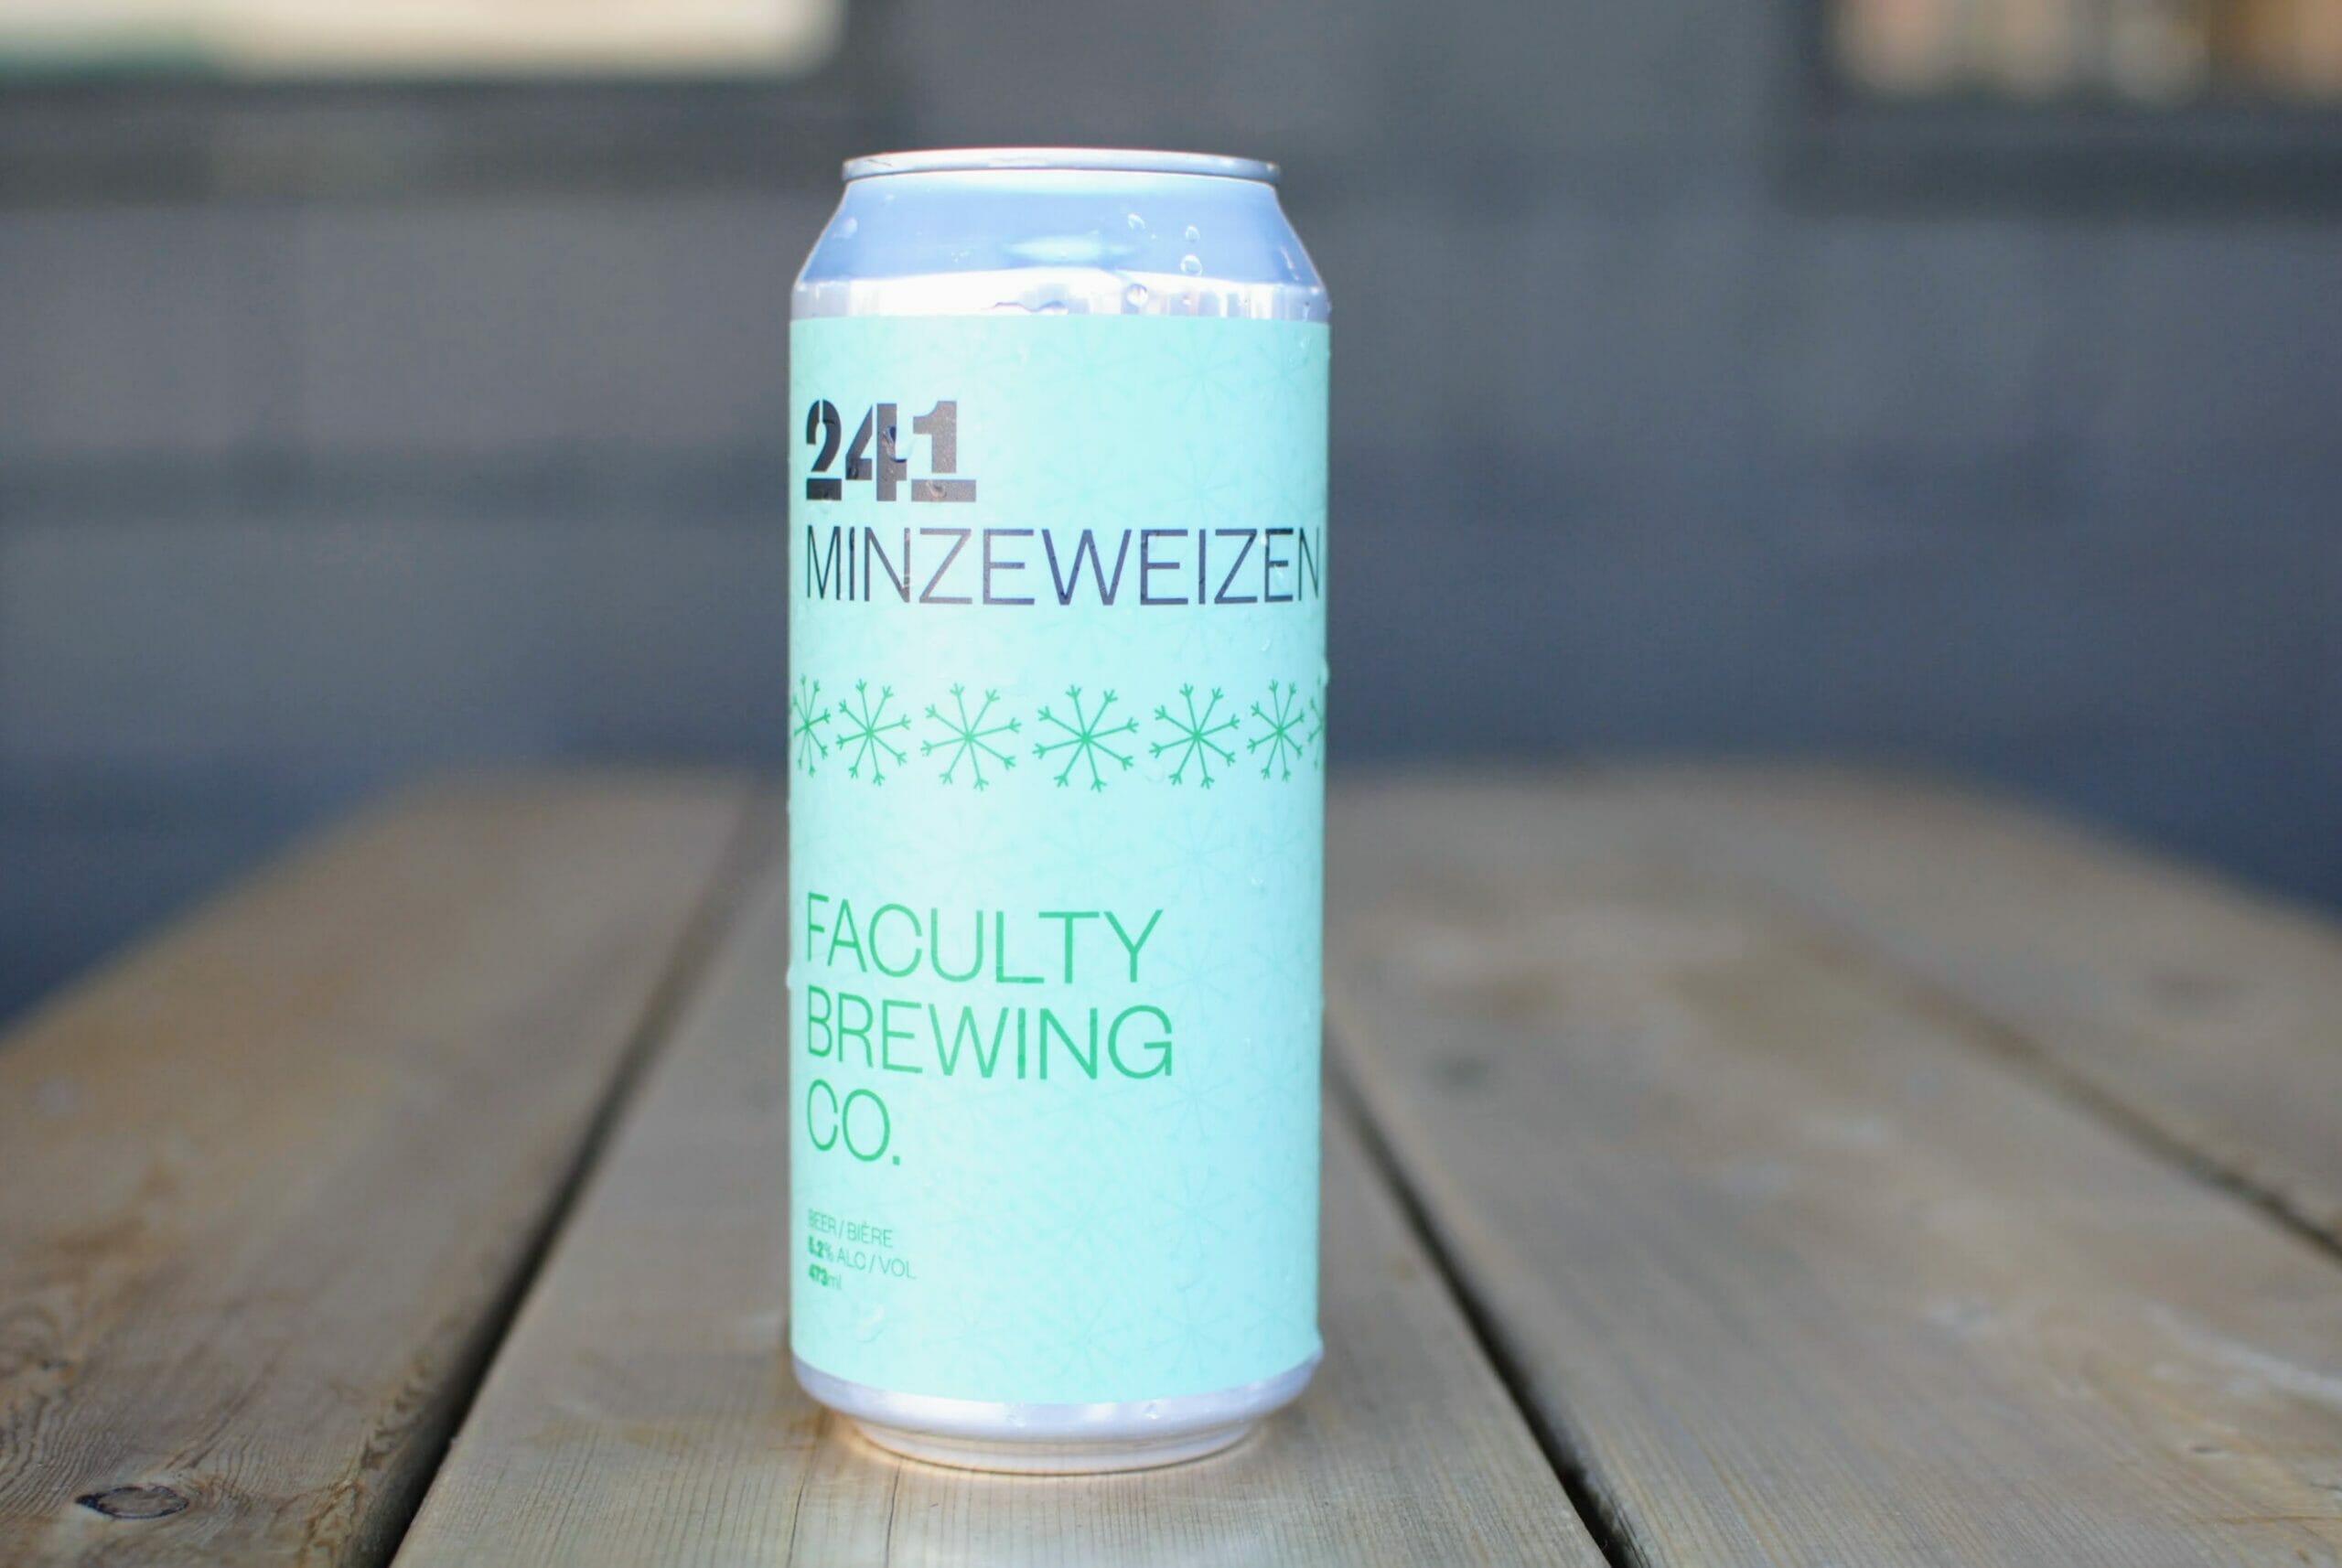 241 Minzeweizen - Faculty Brewing